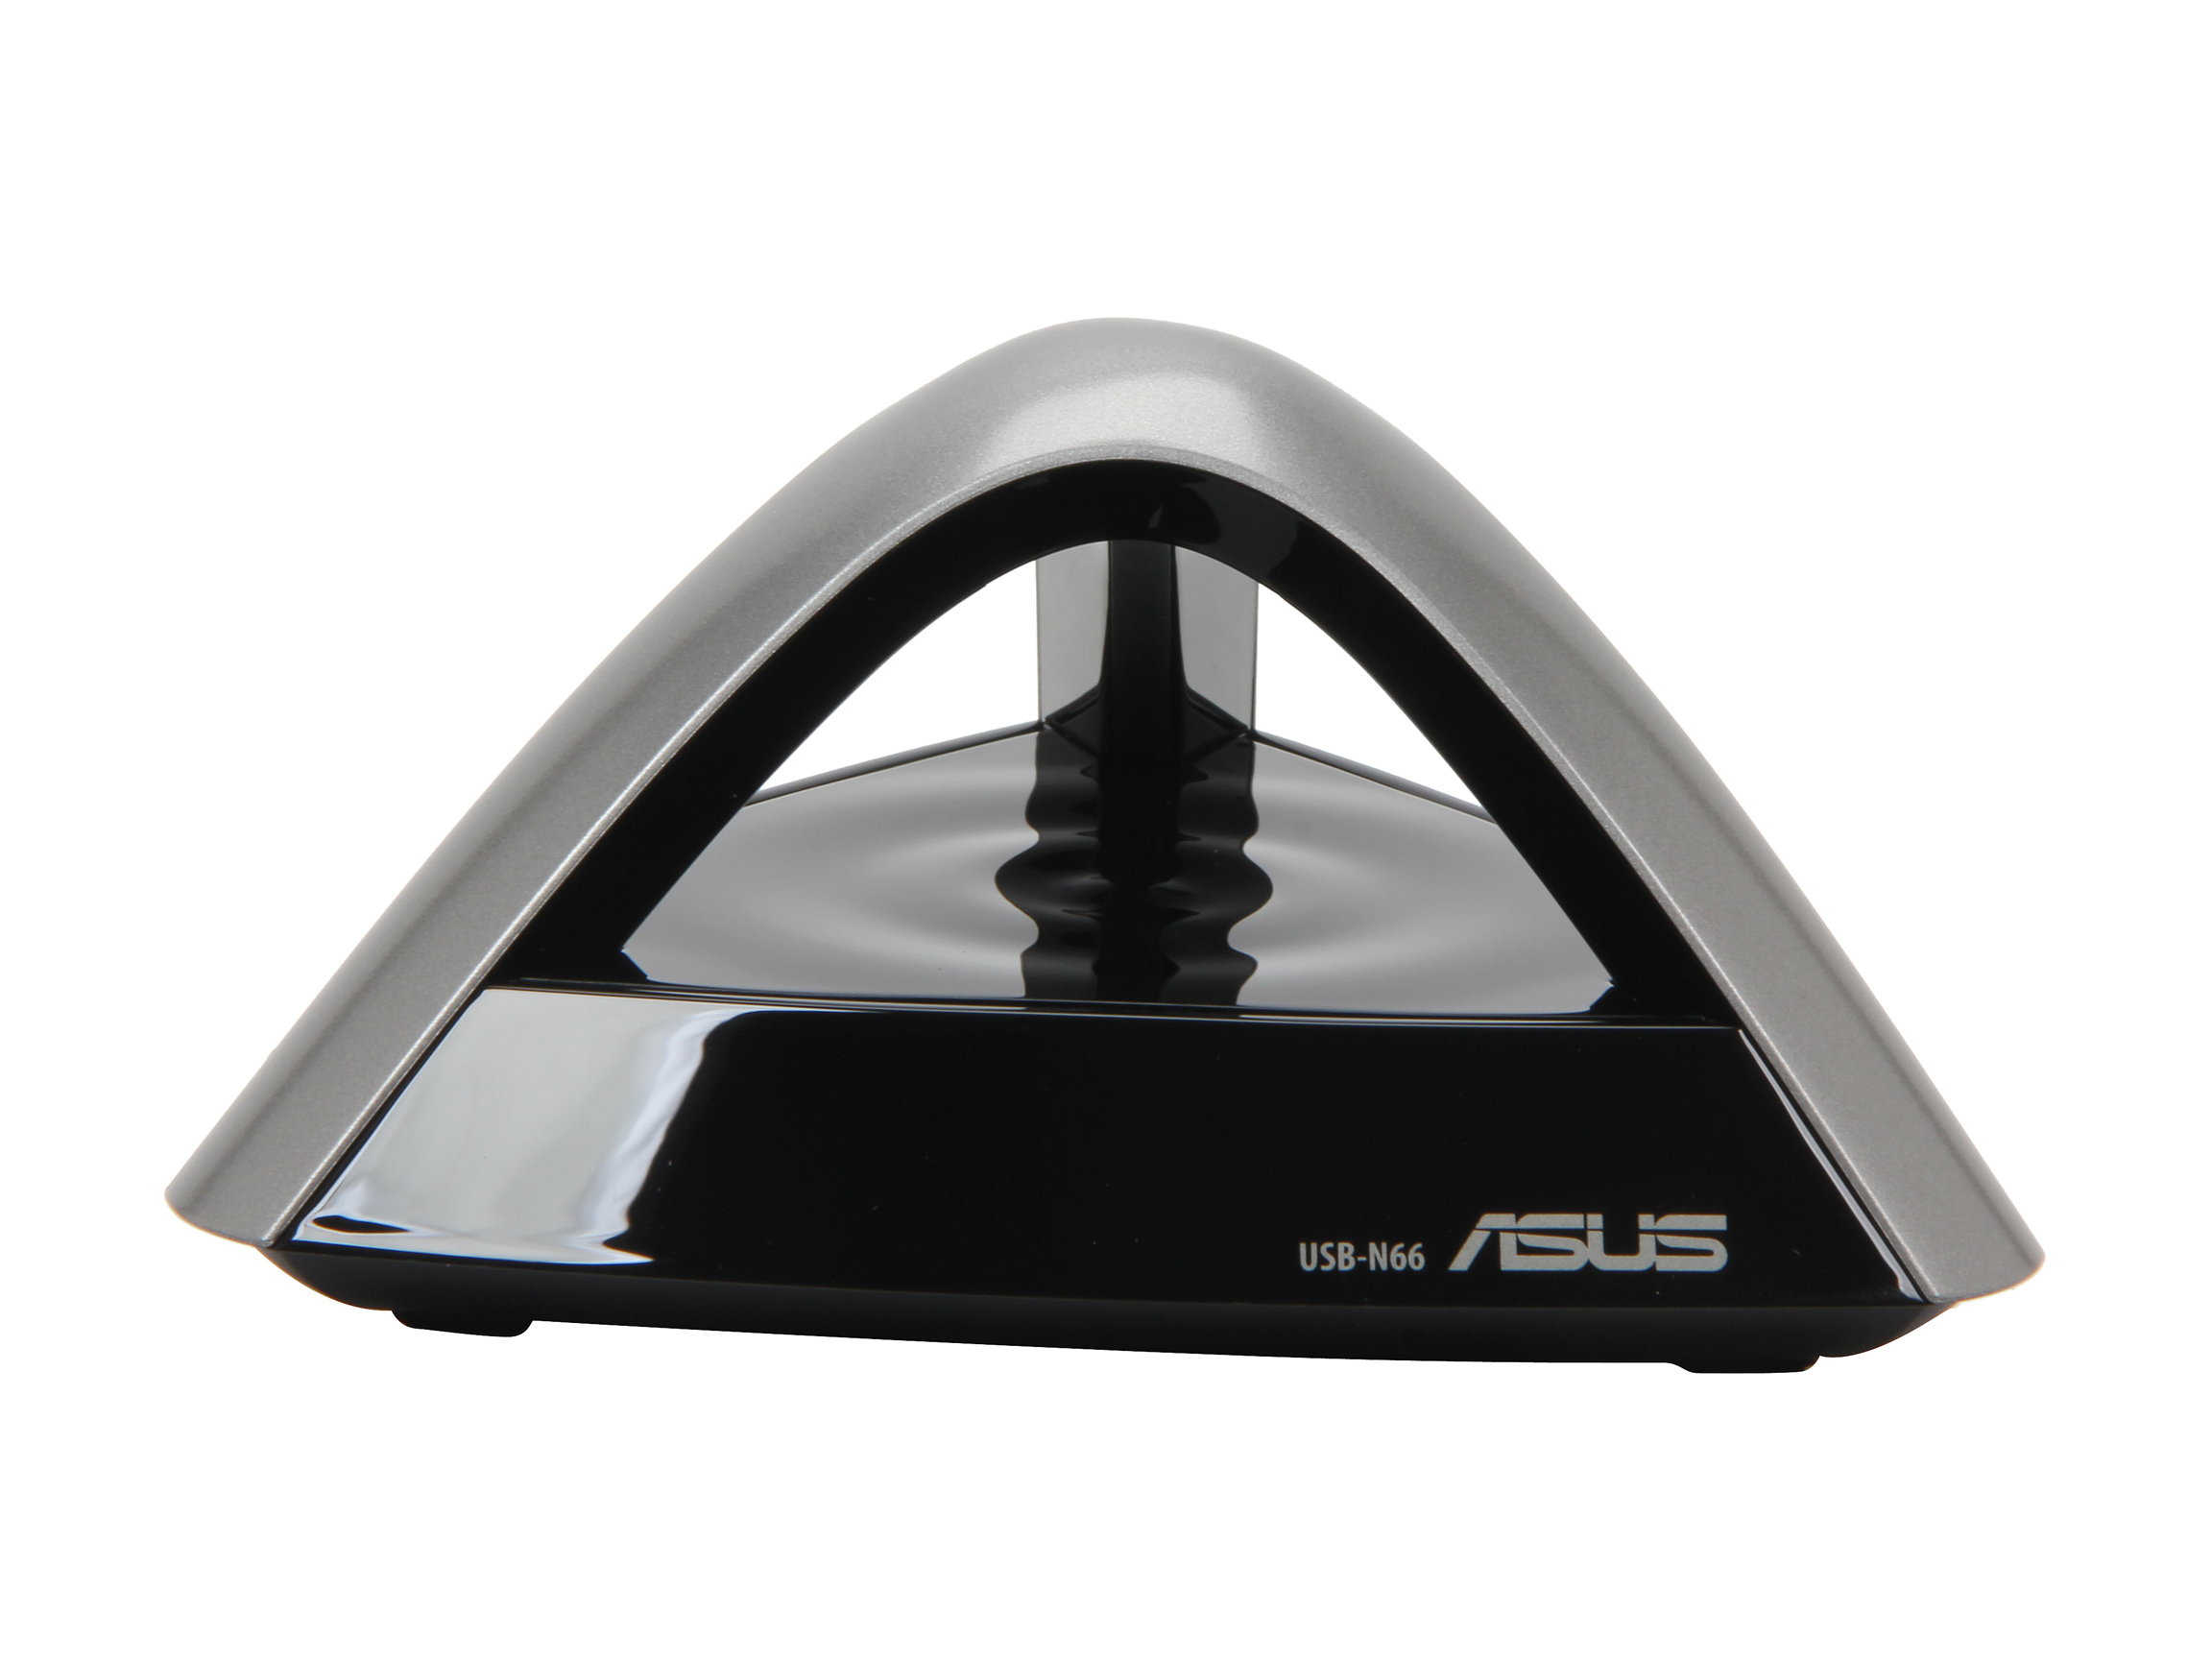 ASUS USB N66 USB 2.0 Dual band Wireless N900 Adapter